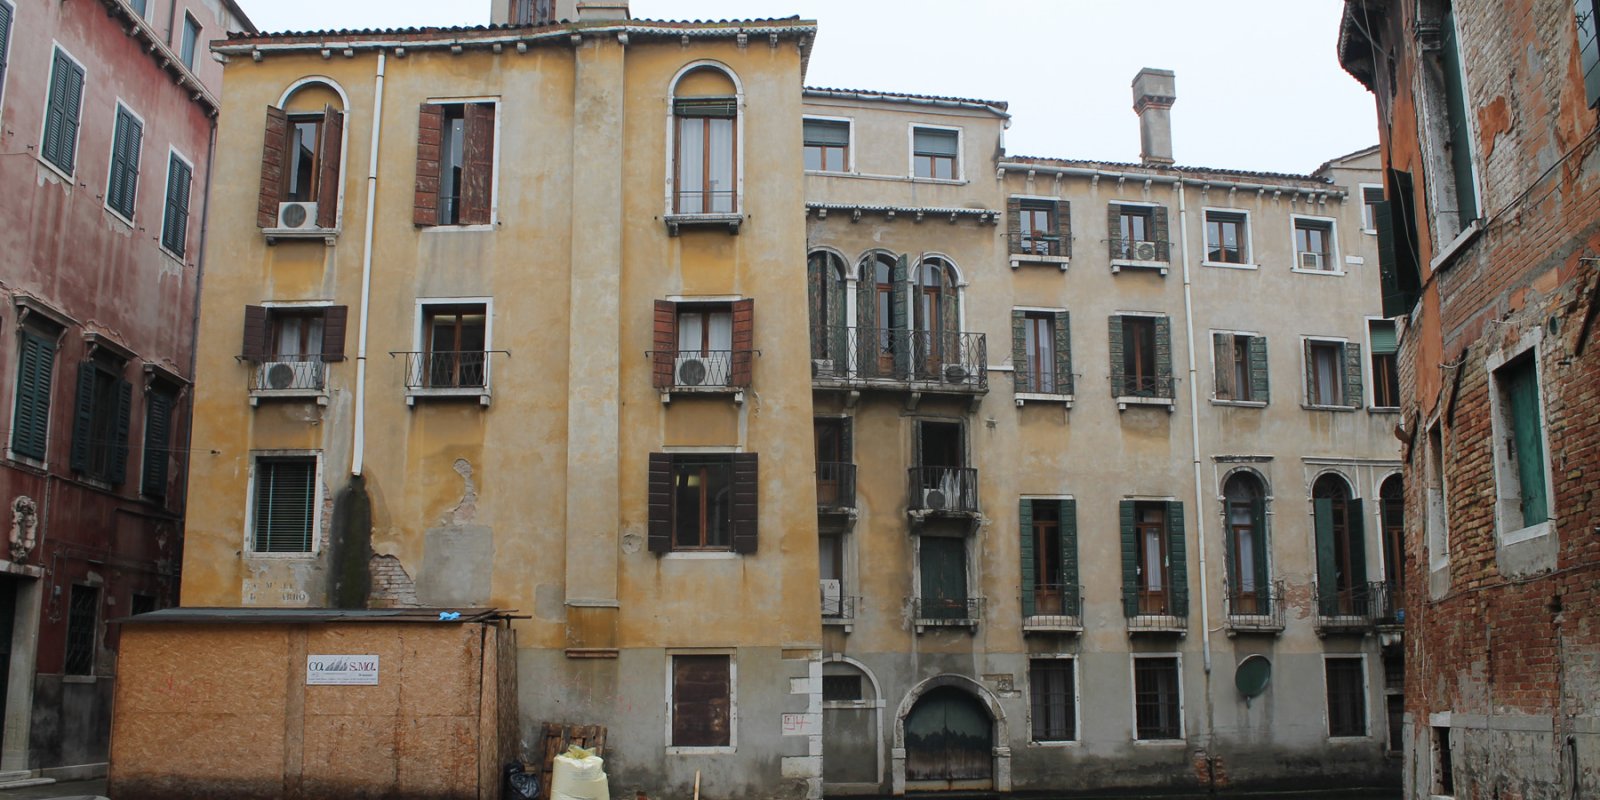 Palazzo San Moise